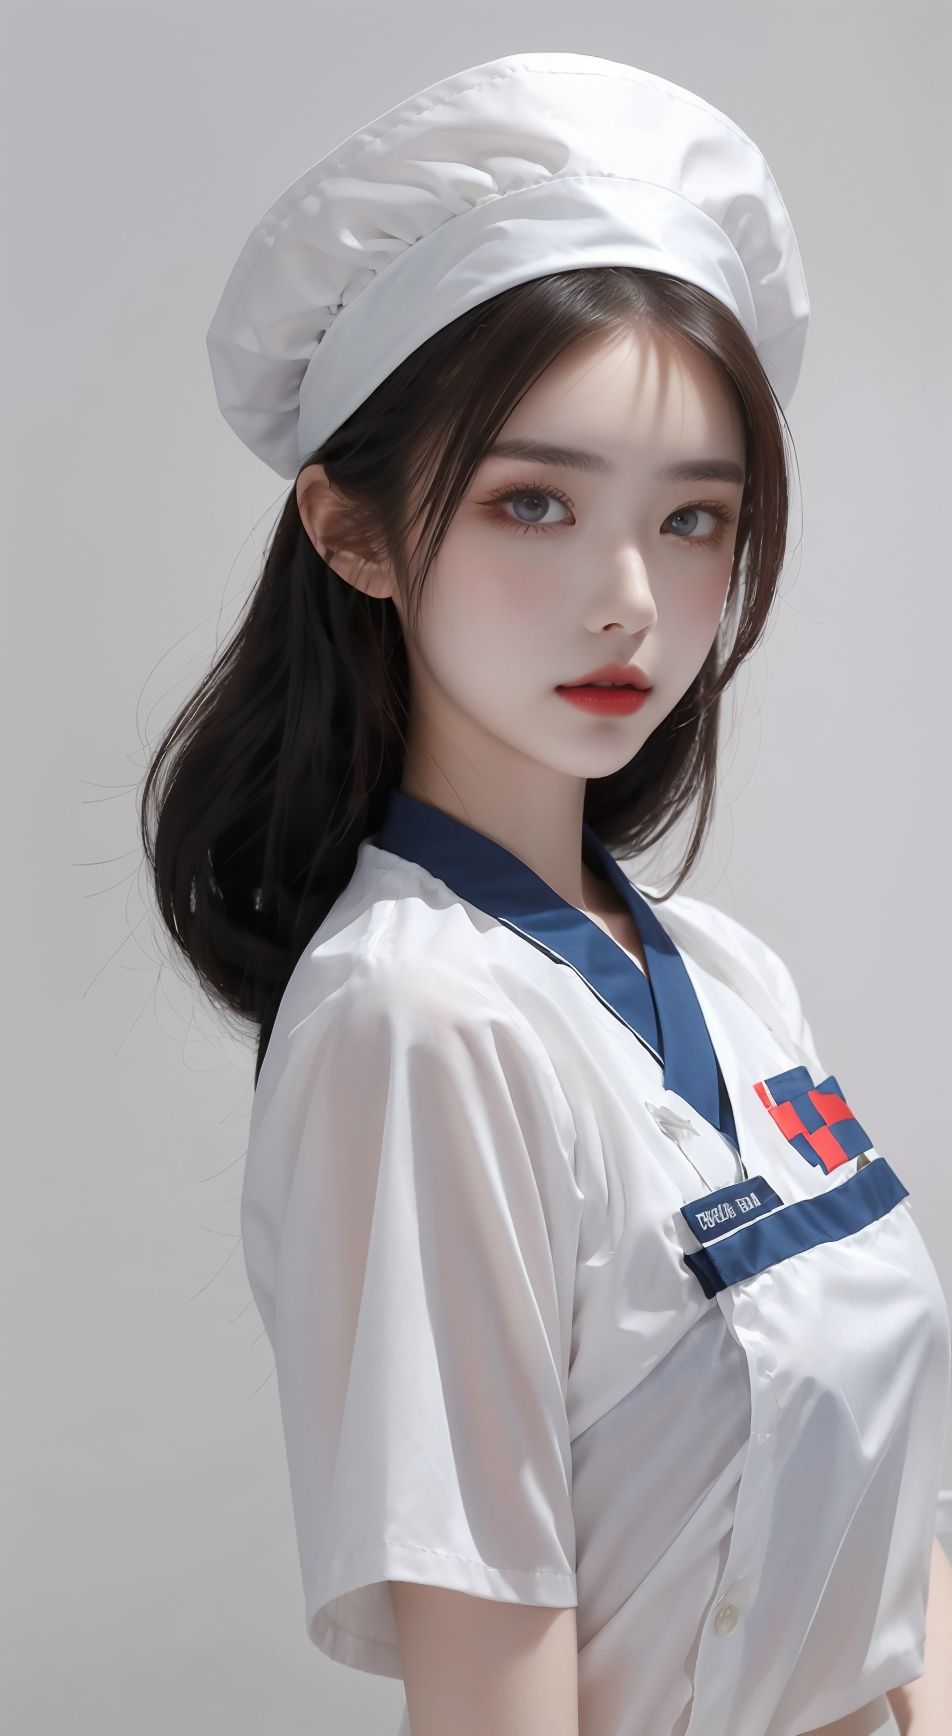  1 girl, wearing transparent white gauze nurse uniform, nurse hat, red cross,